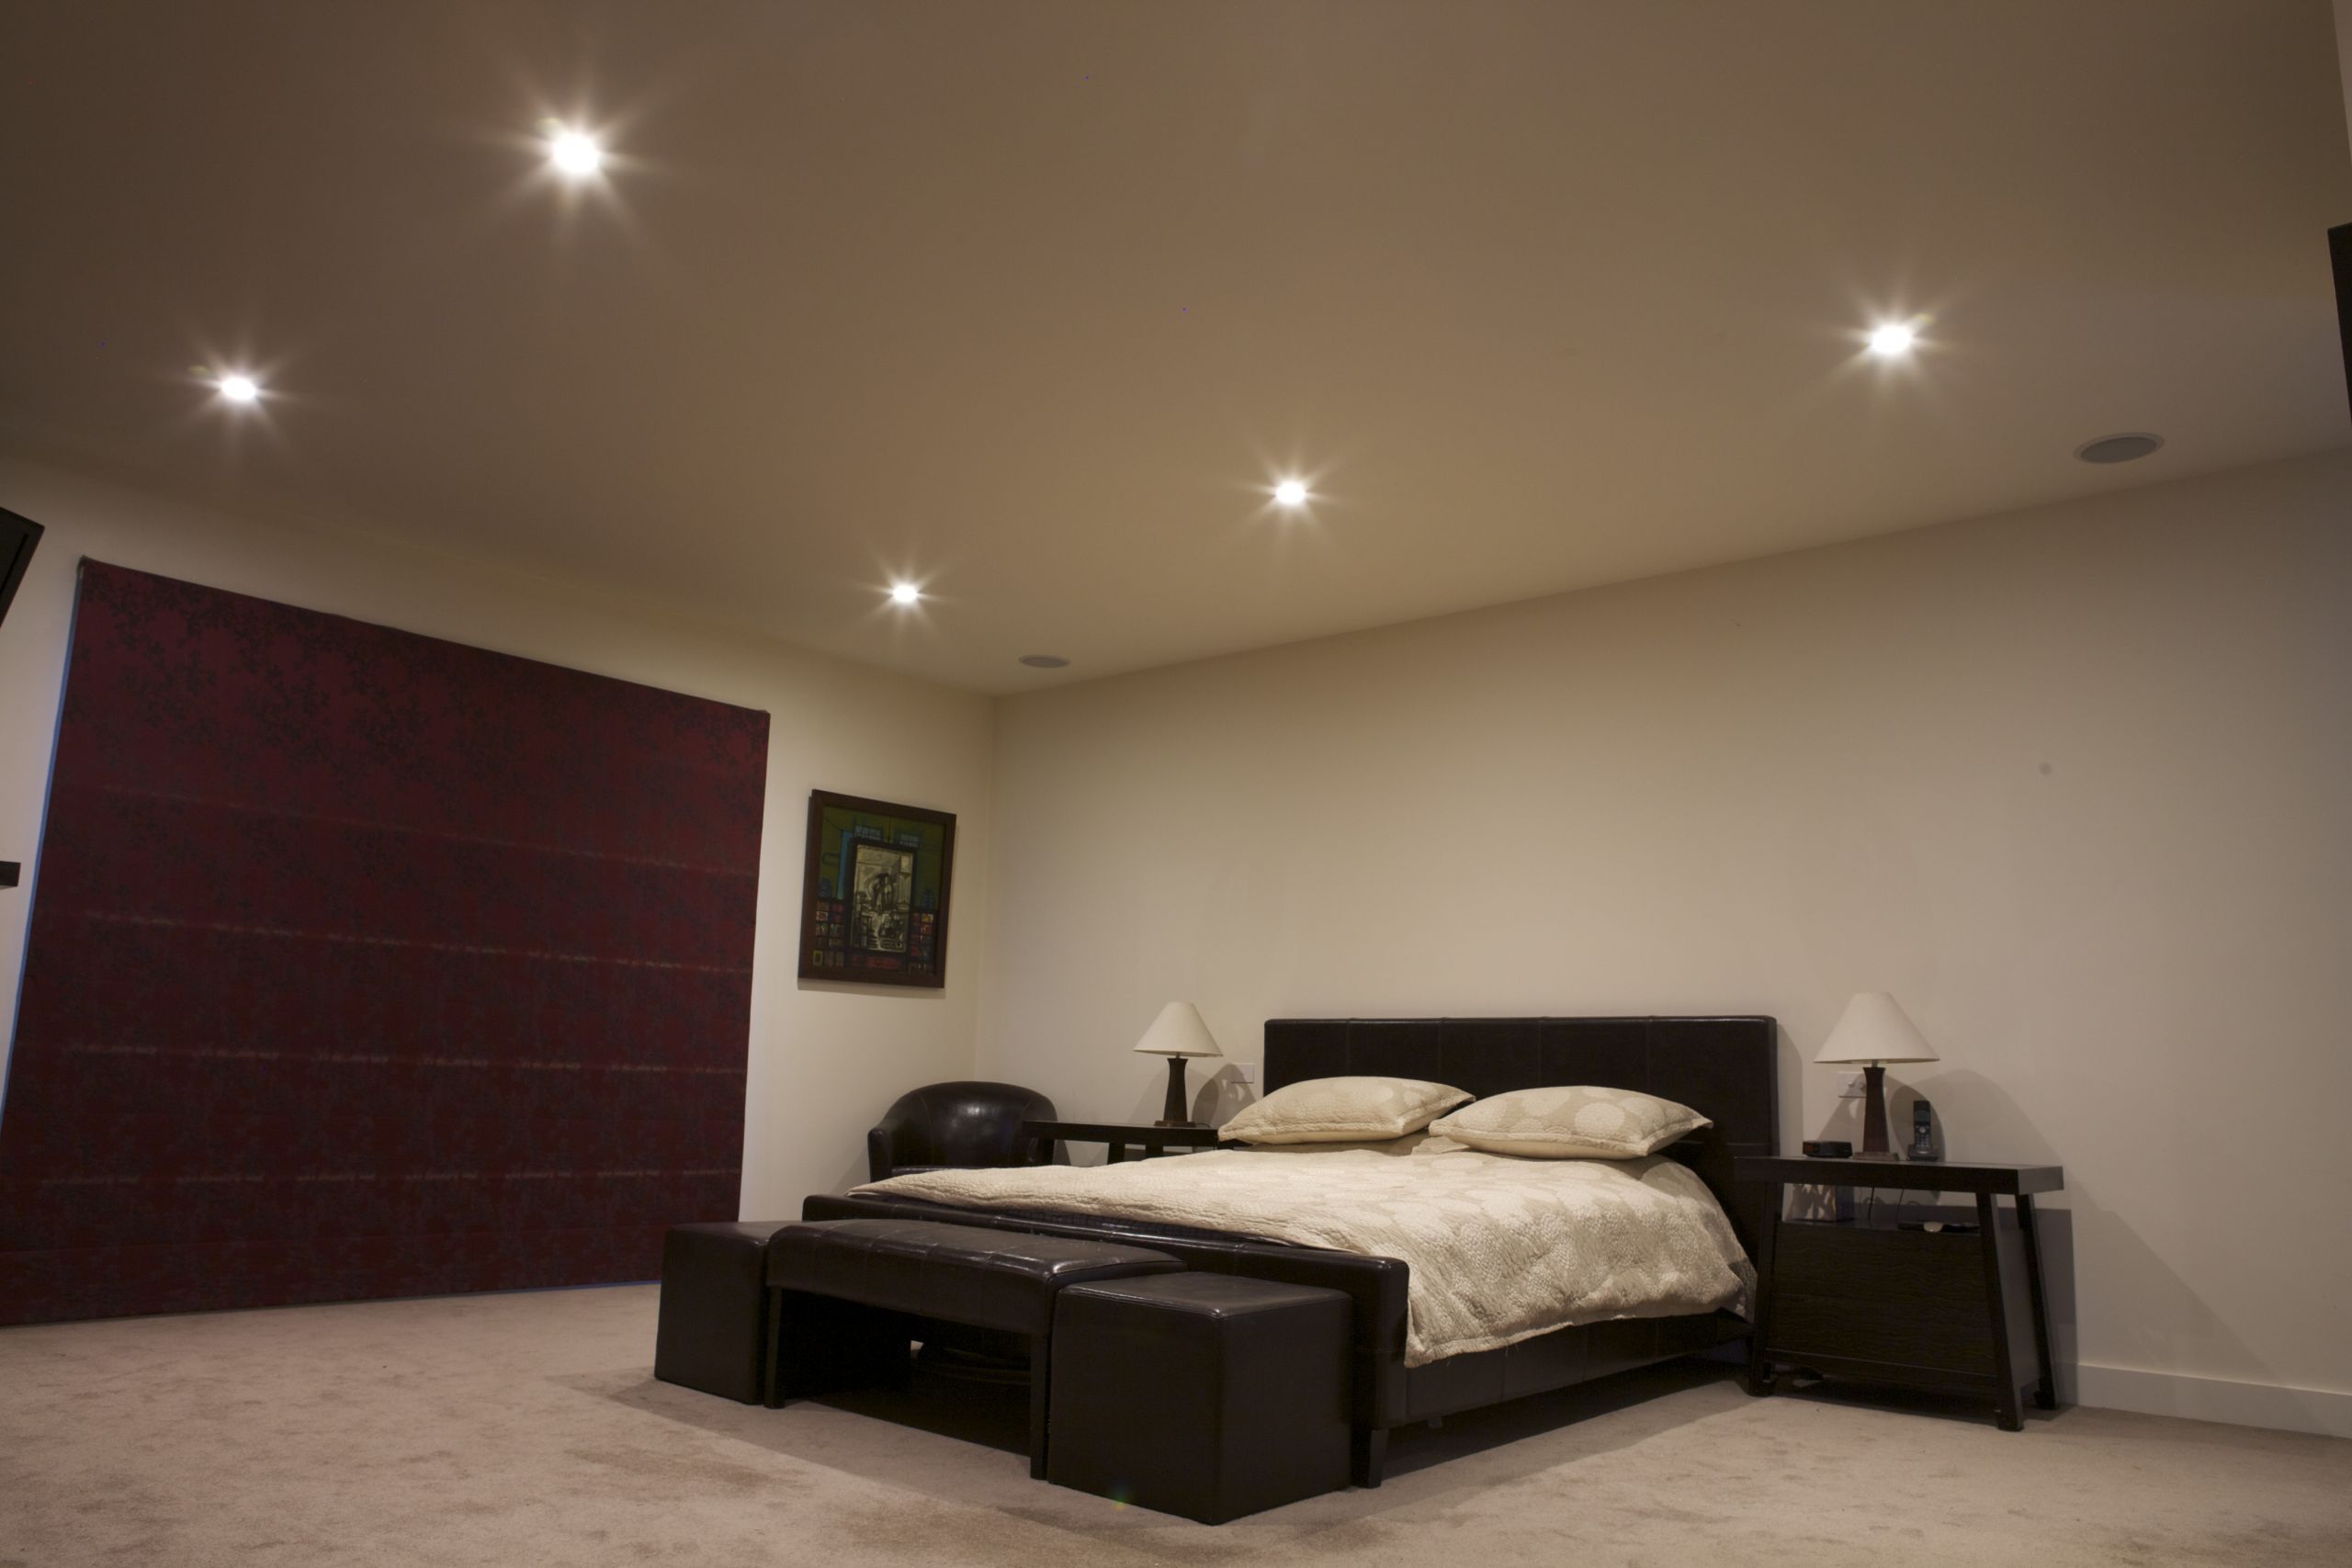 Bedroom Led Lighting
 70mm or 90mm Downlights Choosing LED lights